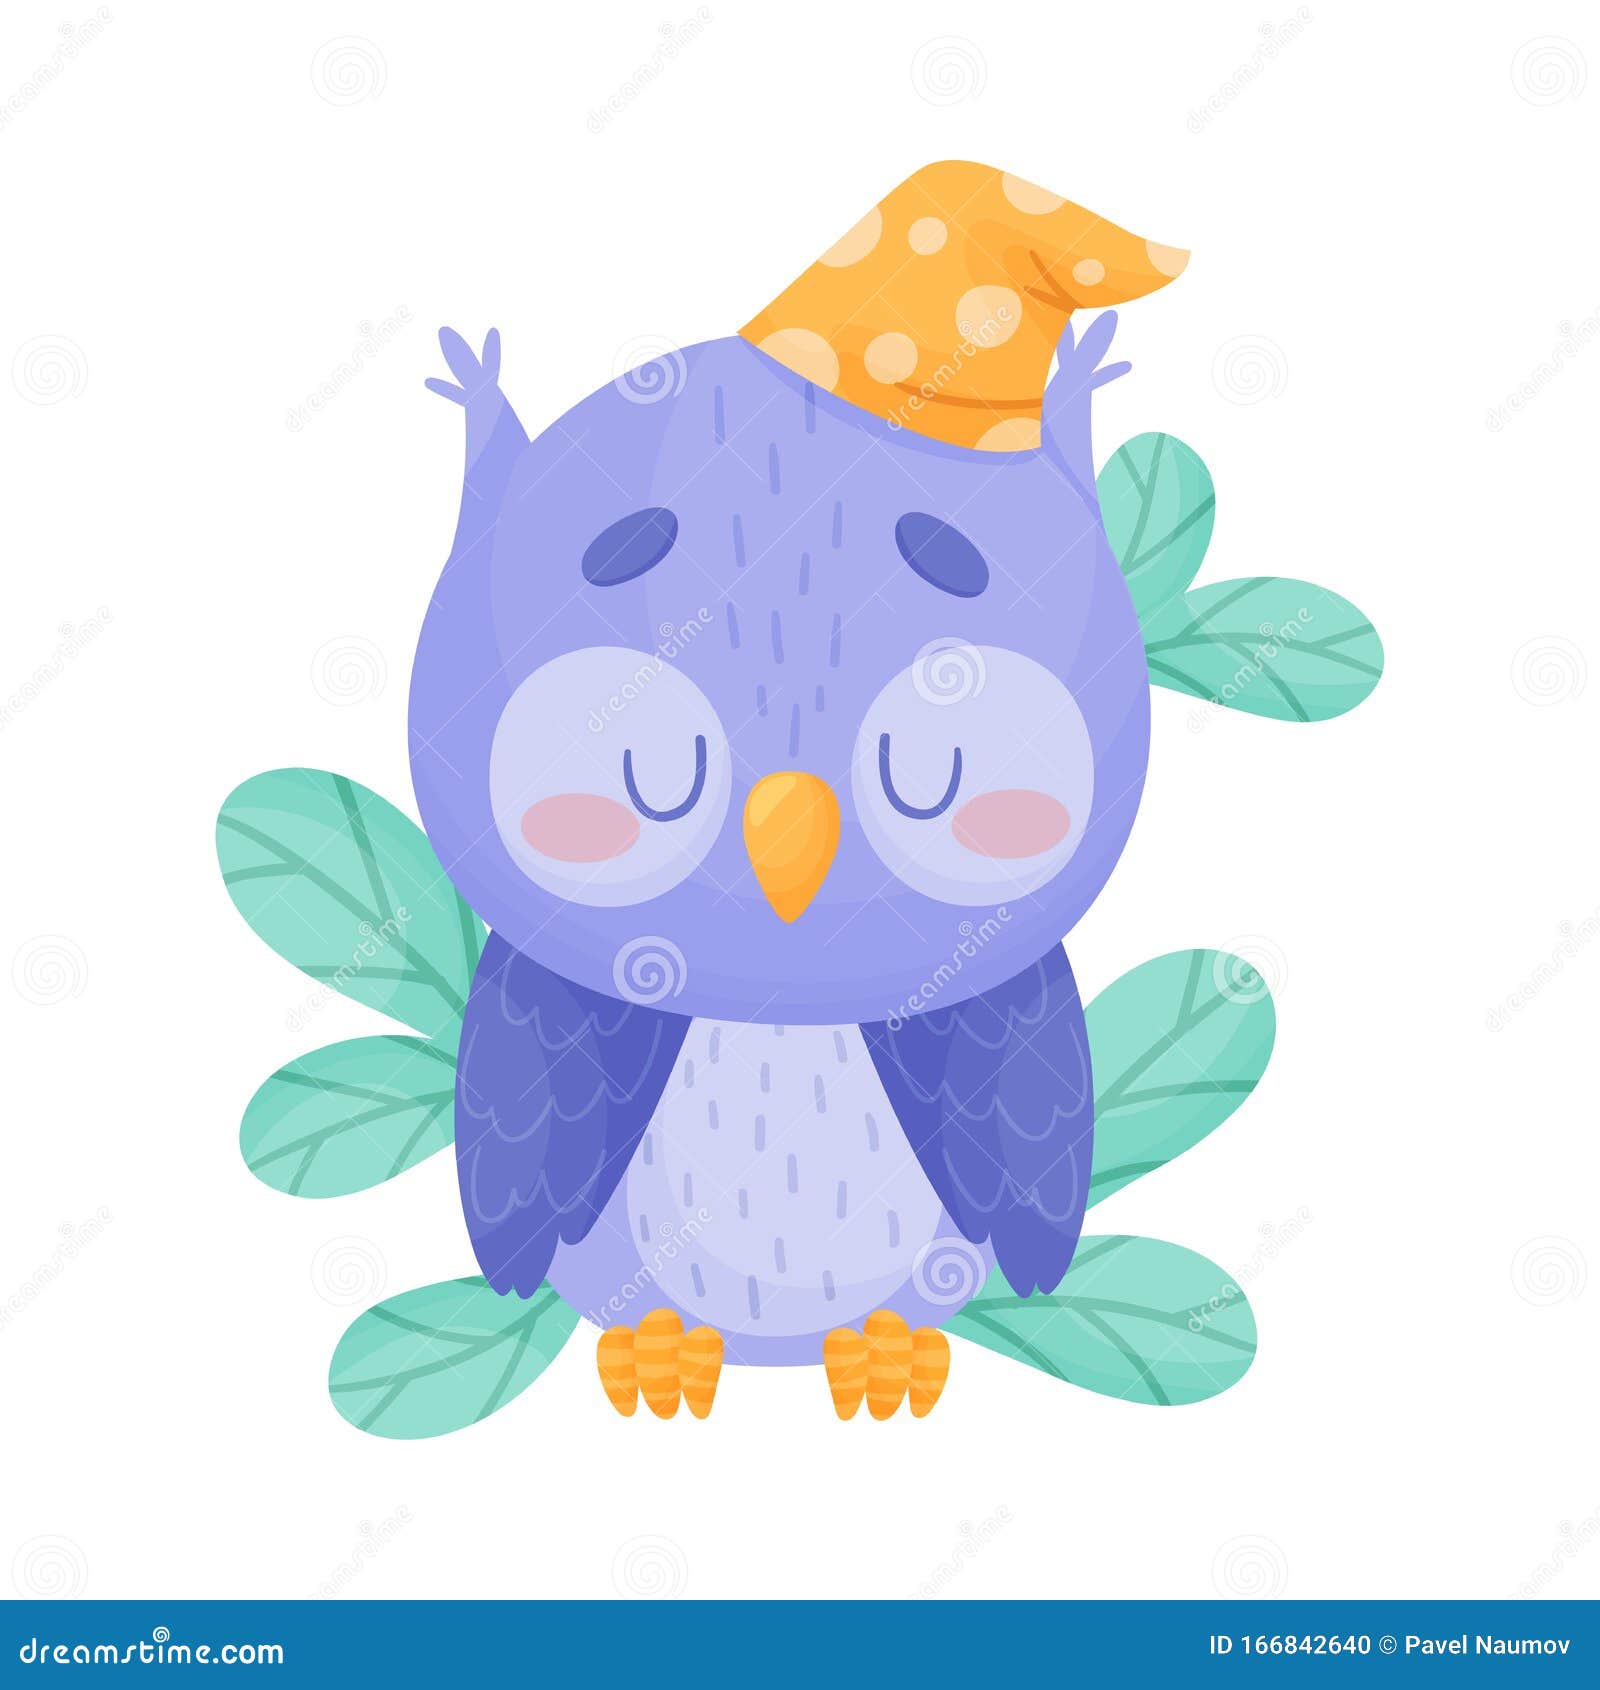 Cute Owl Cartoon Character Sleeping in Sitting Pose on Tree Branch ...